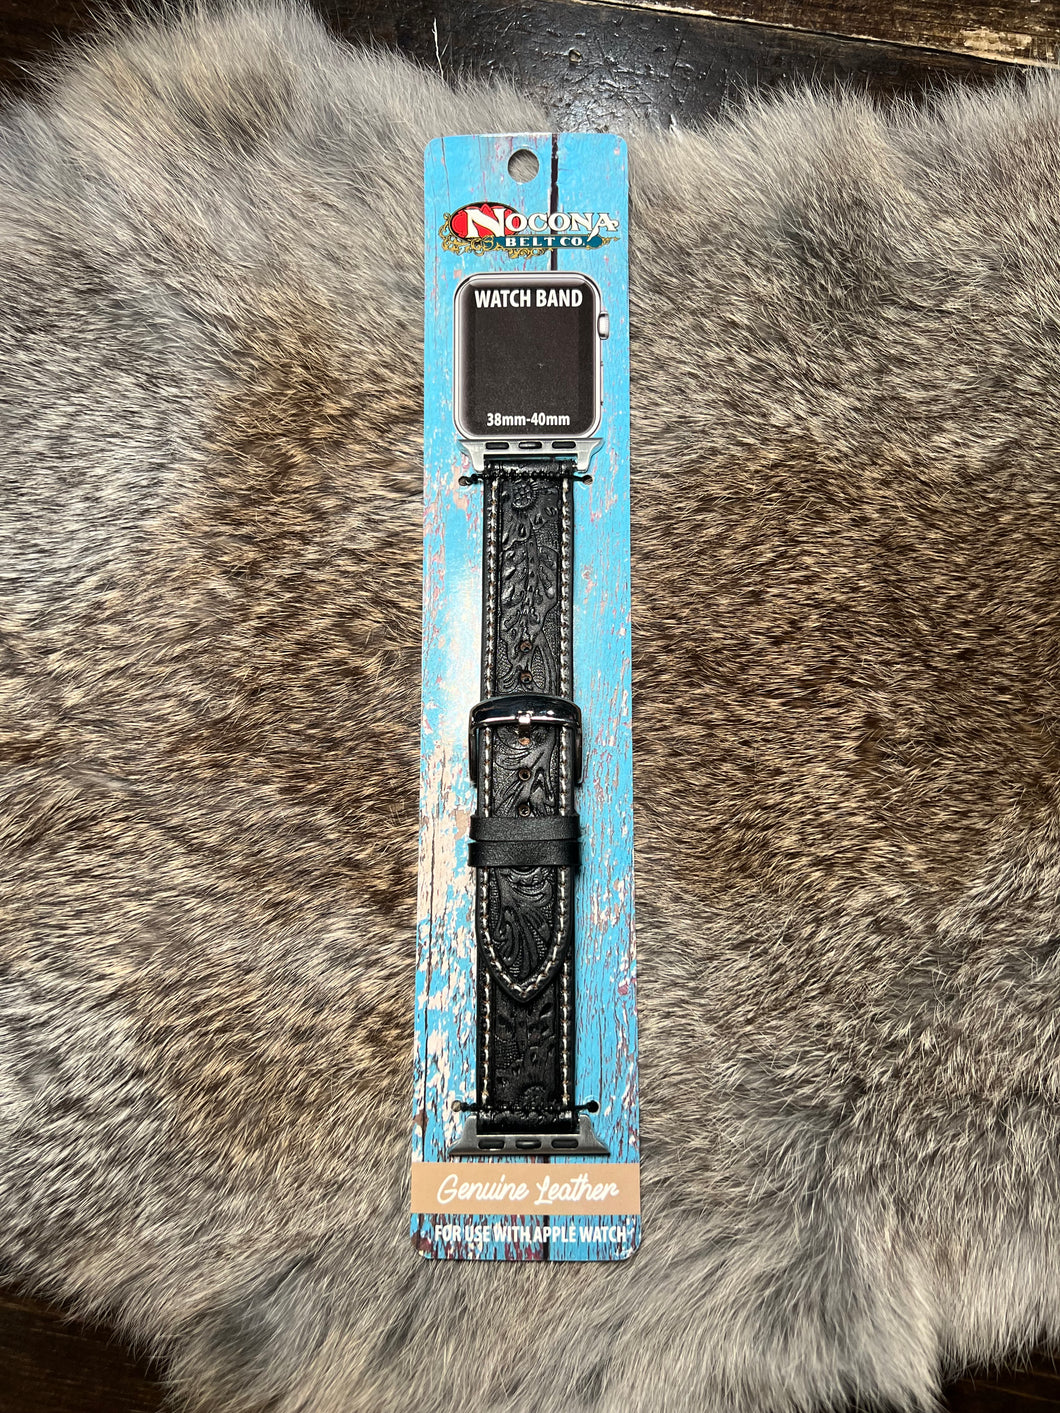 Nocona Watch Band 101 (MEDIUM Size 38mm - 40mm)